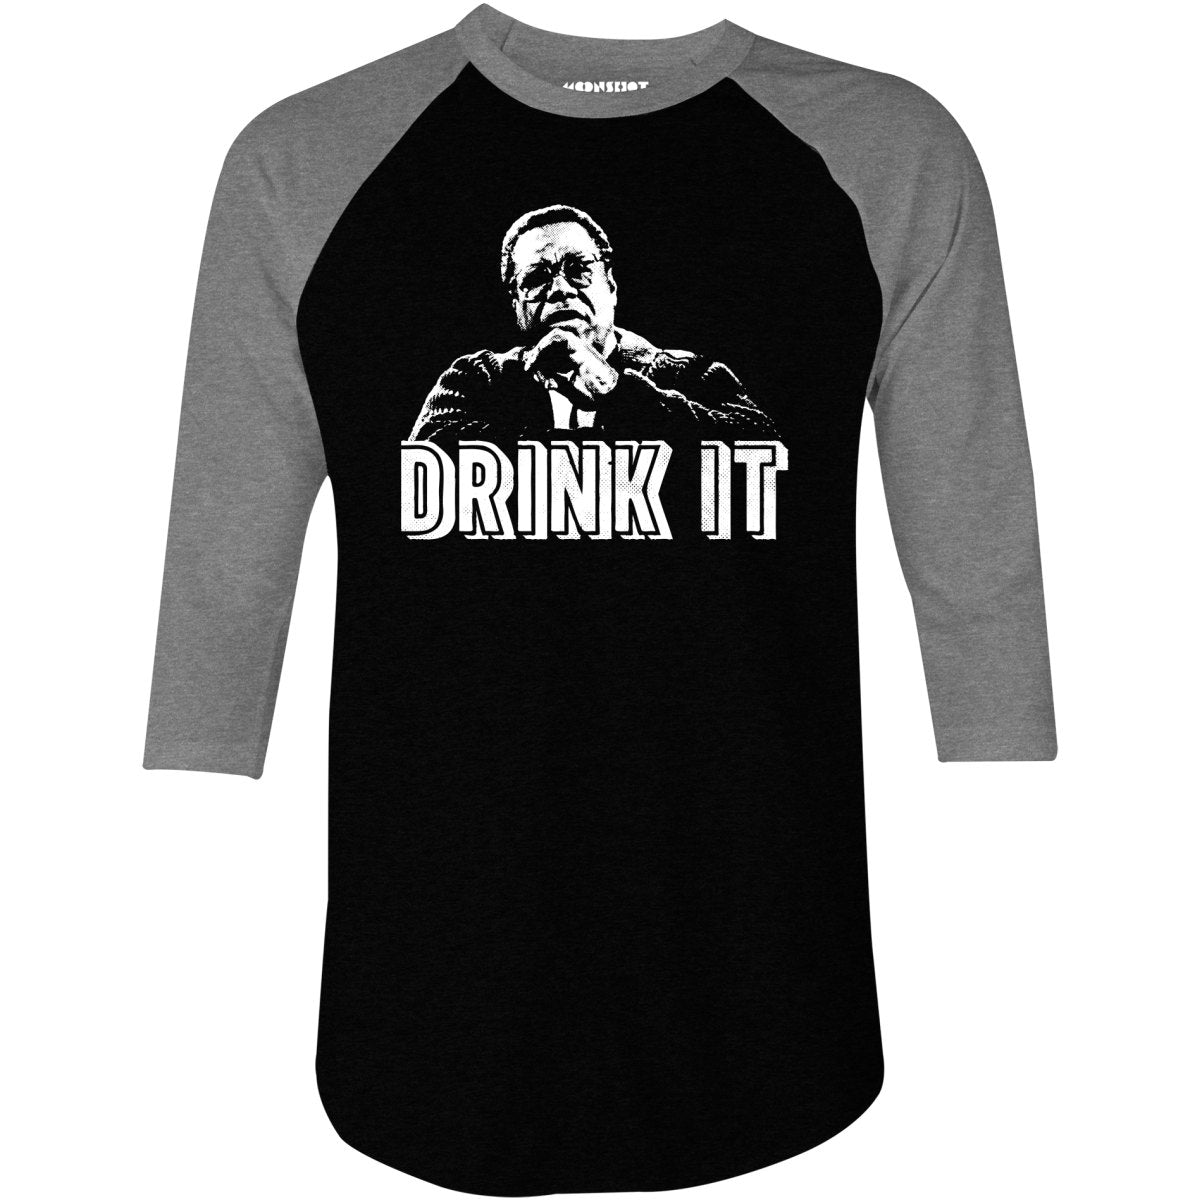 Drink It! - 3/4 Sleeve Raglan T-Shirt